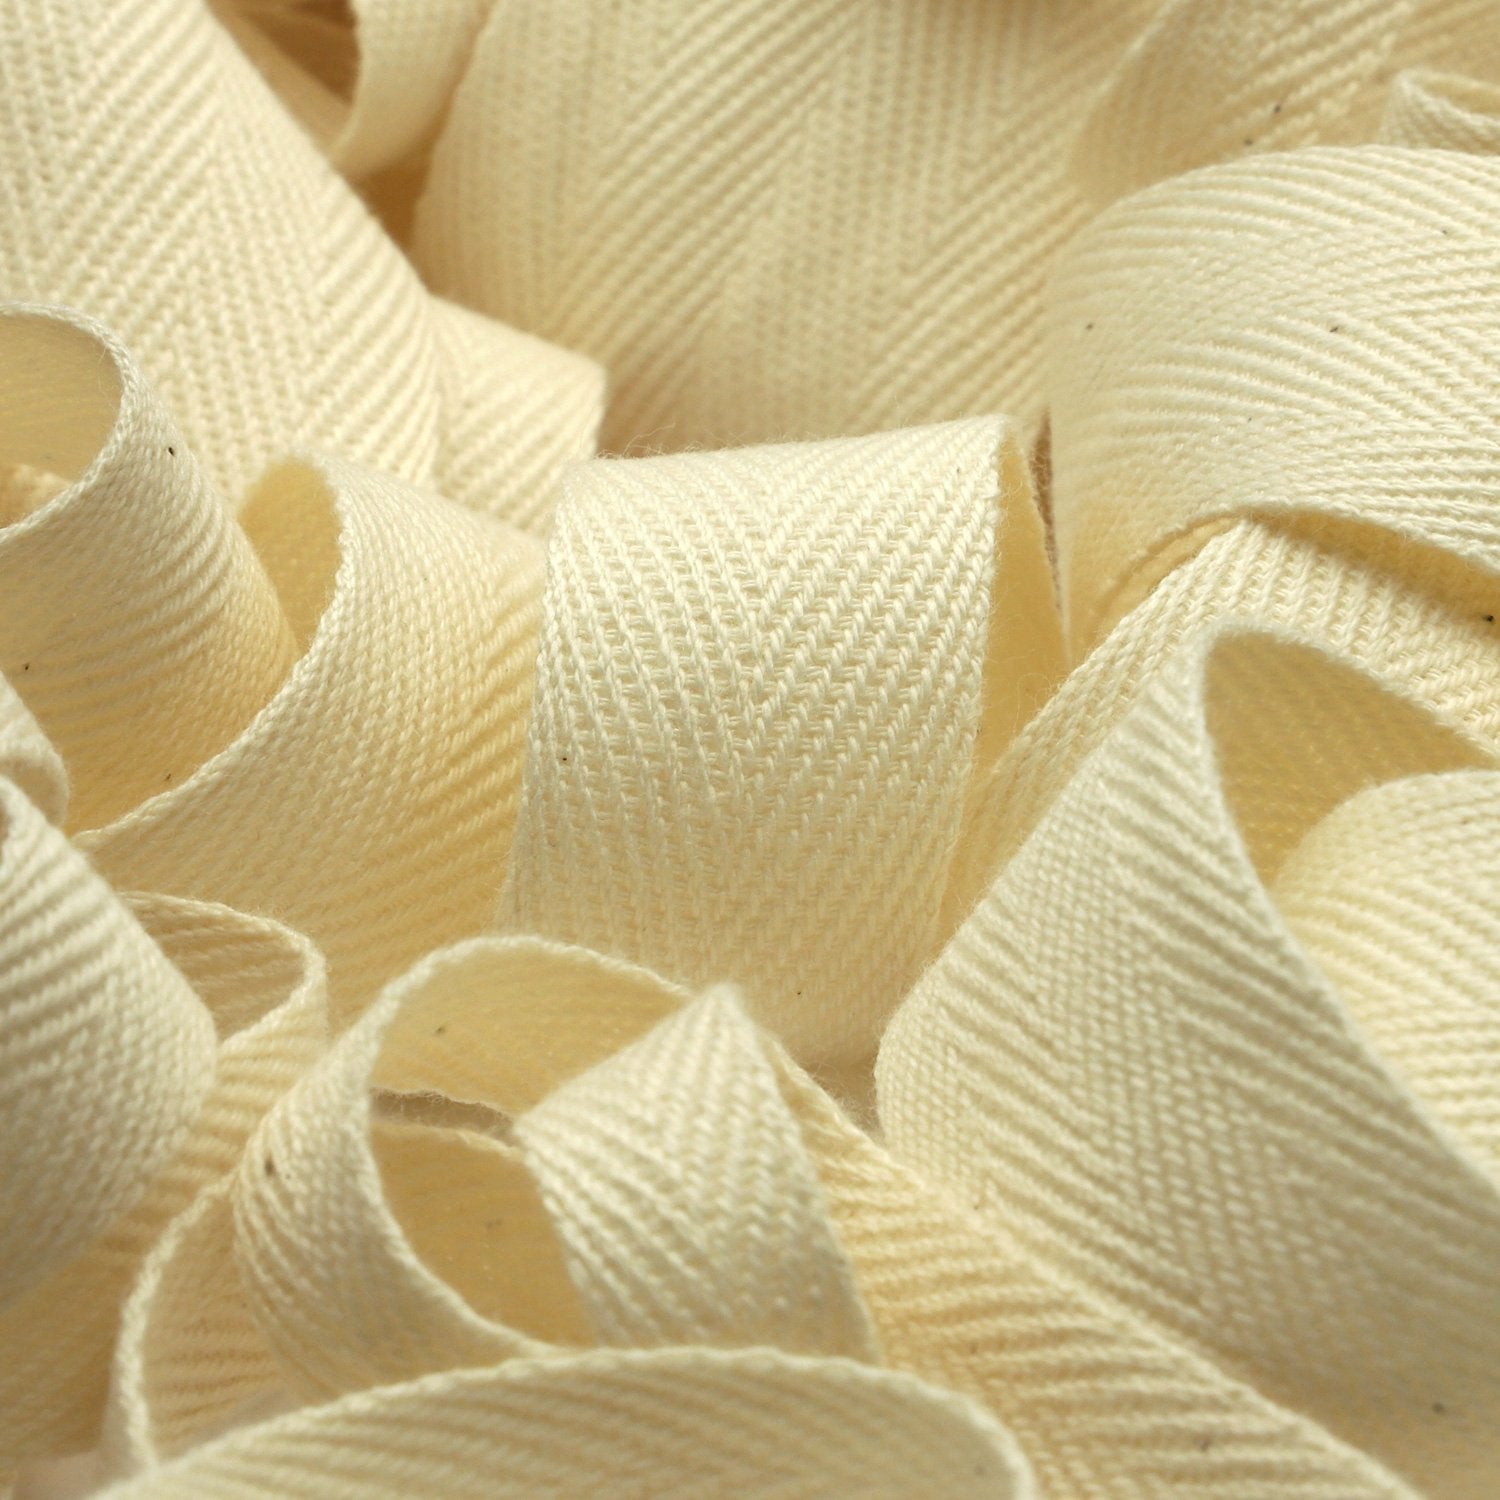 FUJIYAMA RIBBON Organic Cotton Herringbone Ribbon 38mm Ecru 9.14 Meters Roll